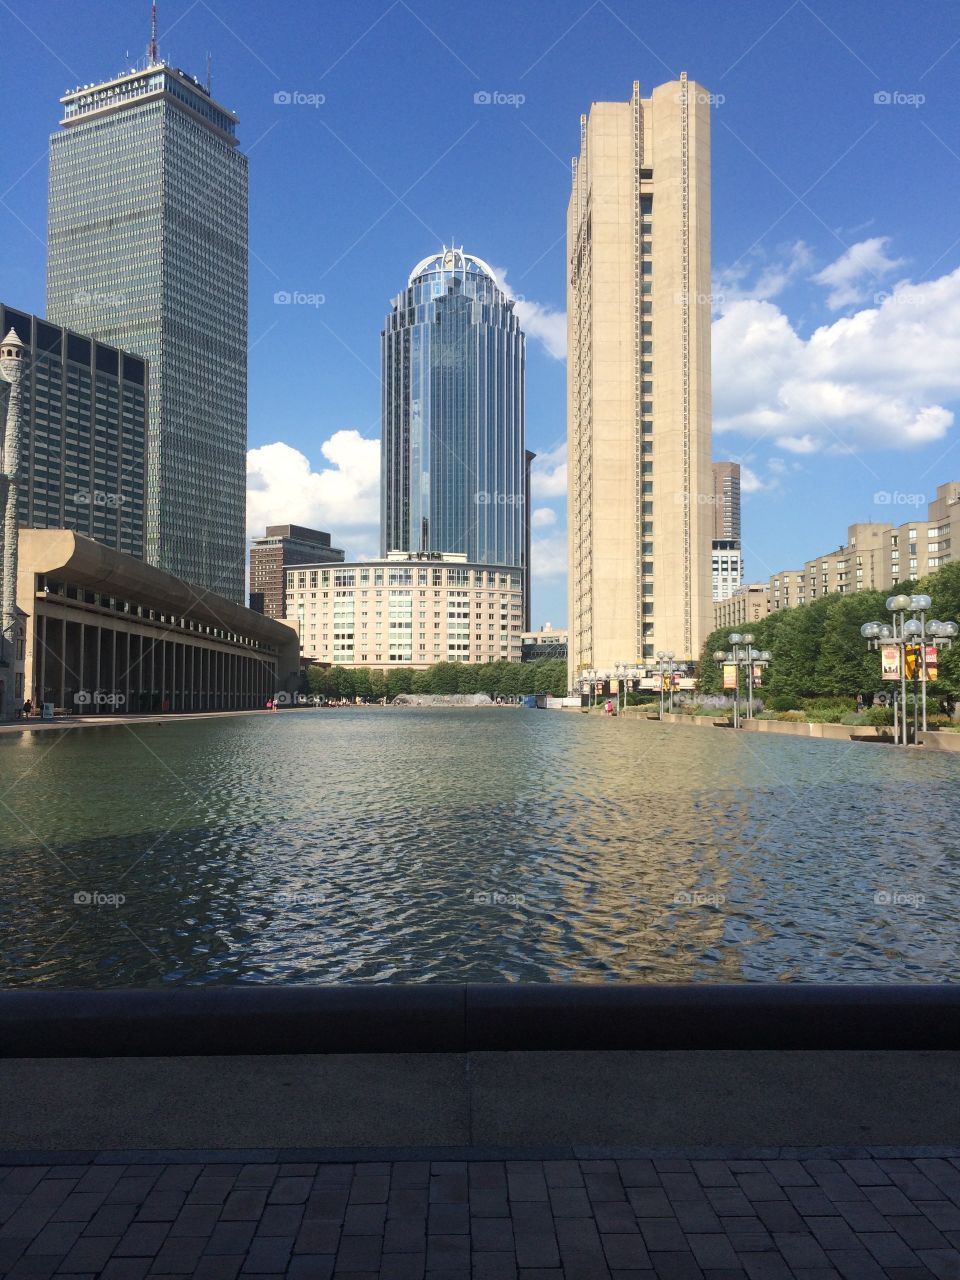 Boston Reflecting Pool Among Buildings